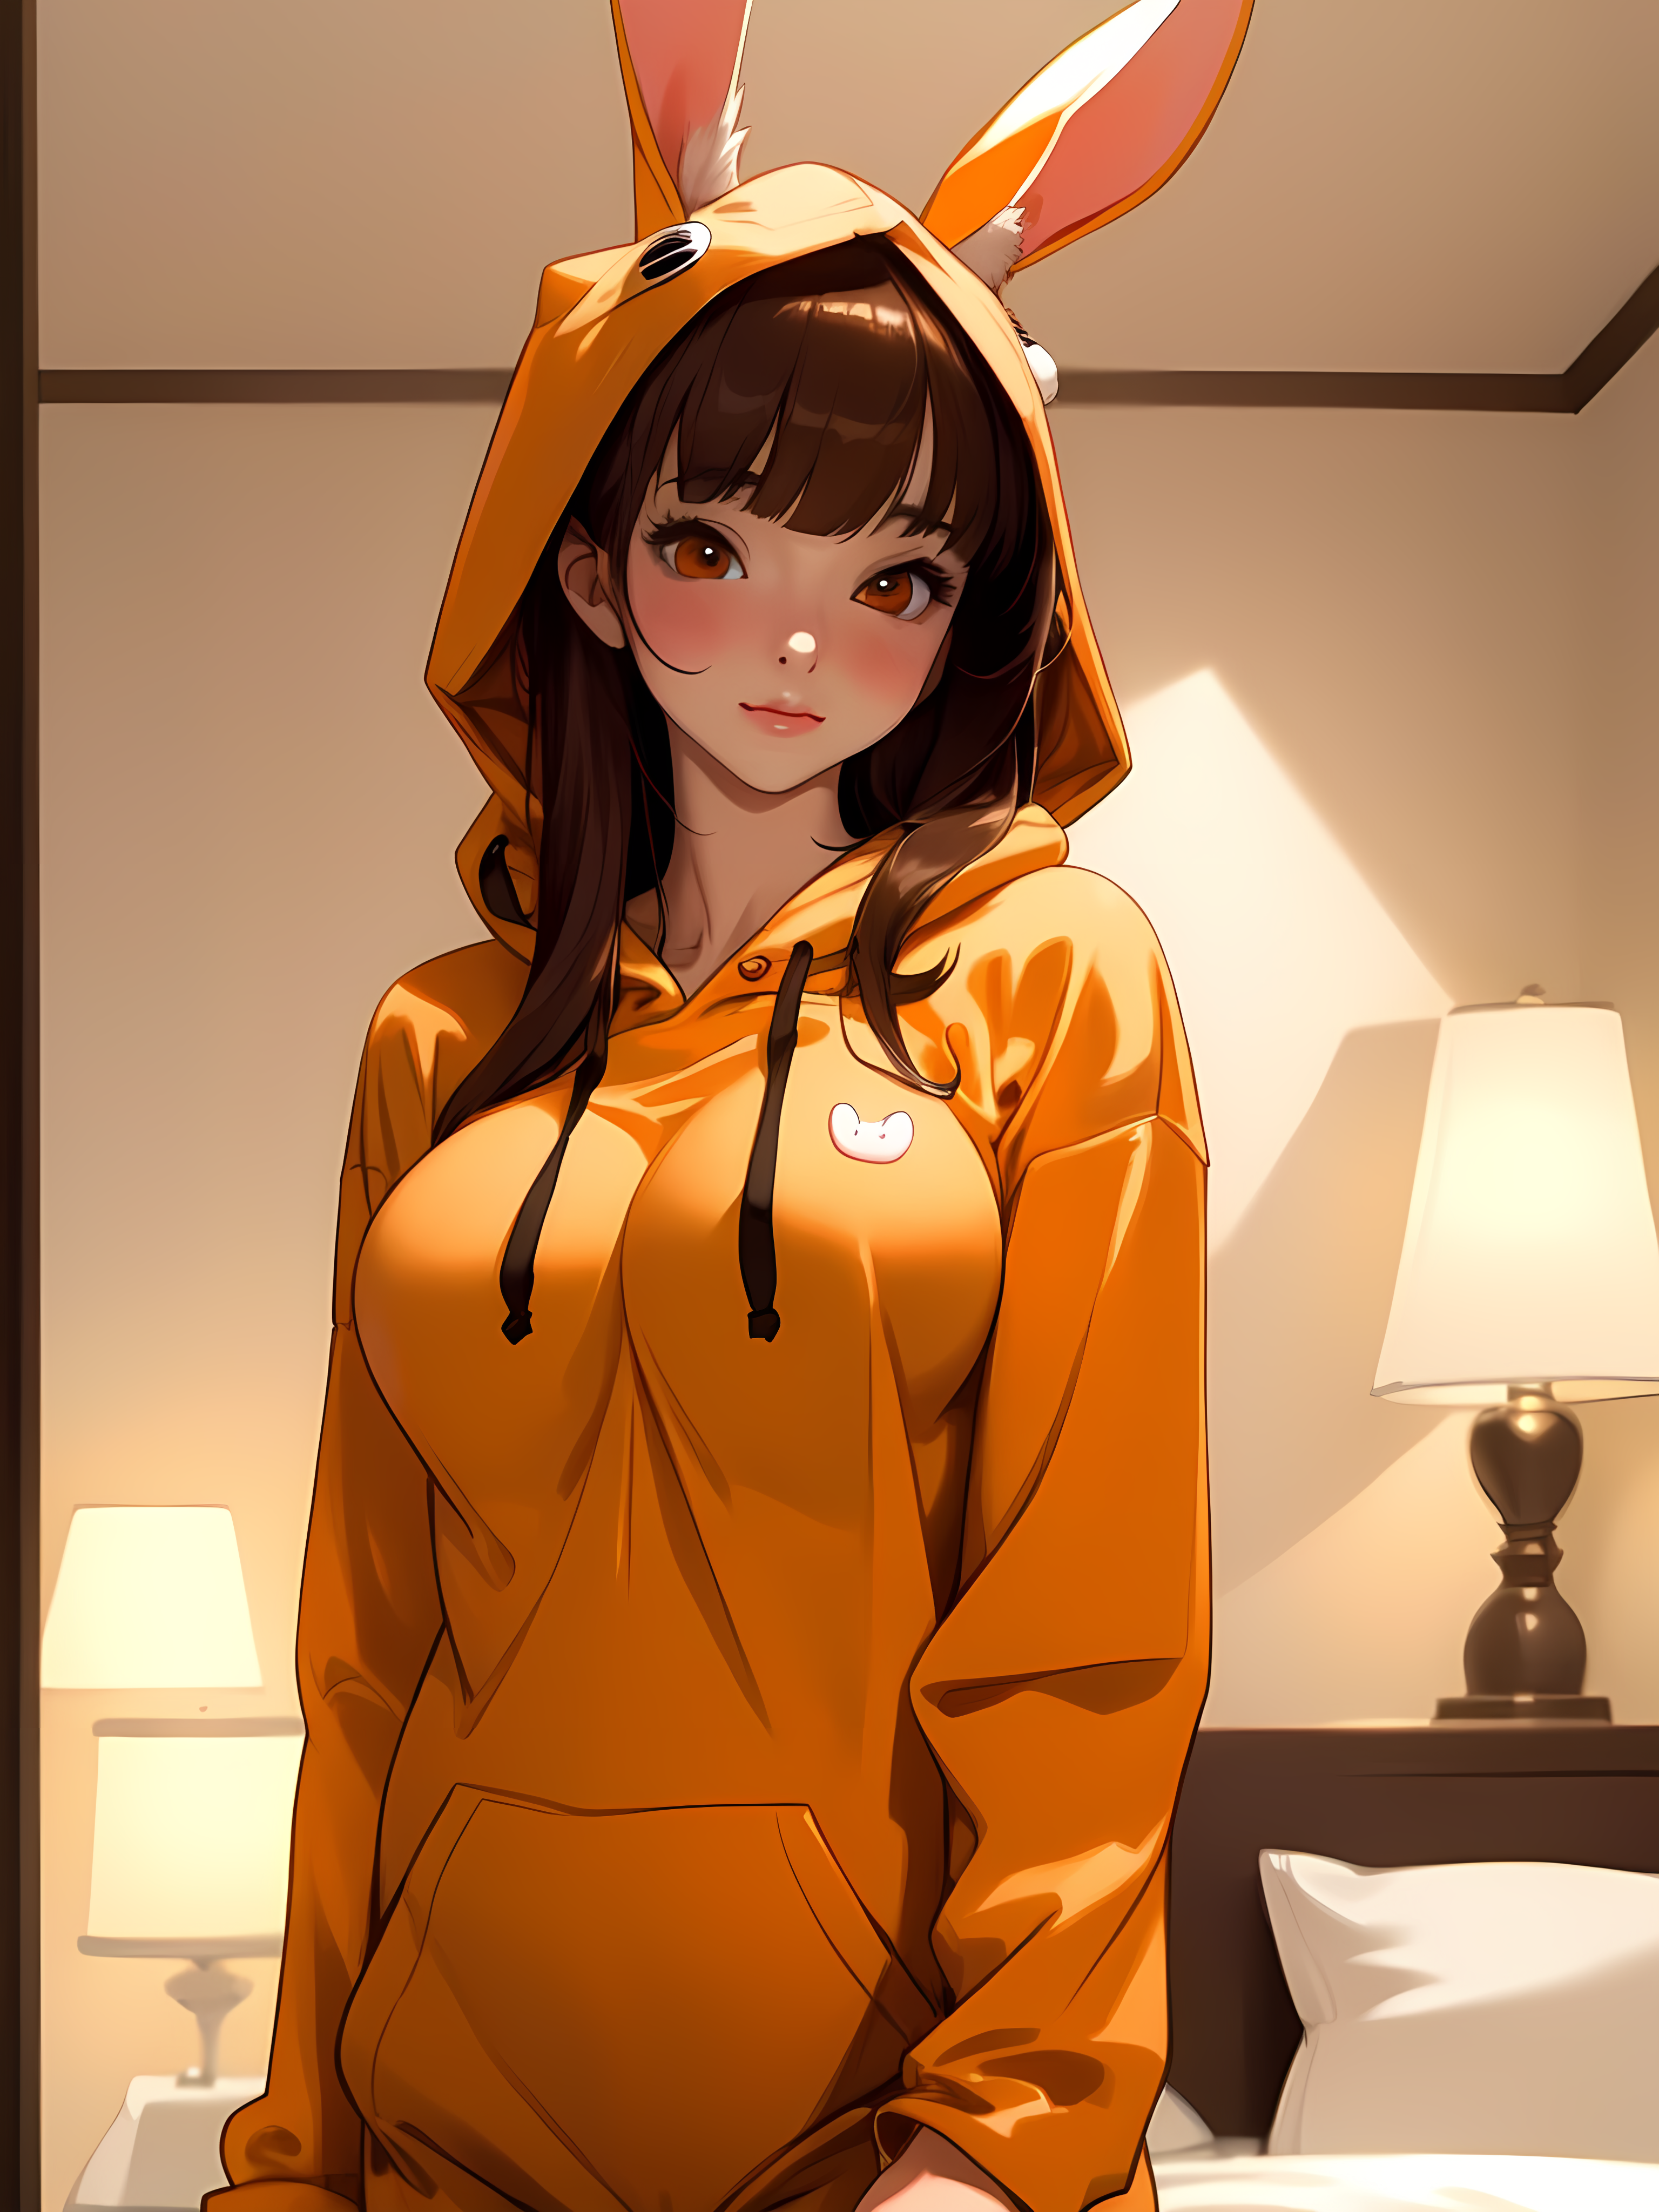 Anime 3072x4096 AI art anime girls pyjamas bunny ears hoods looking at viewer orange hoodie blushing long hair brunette portrait display lamp